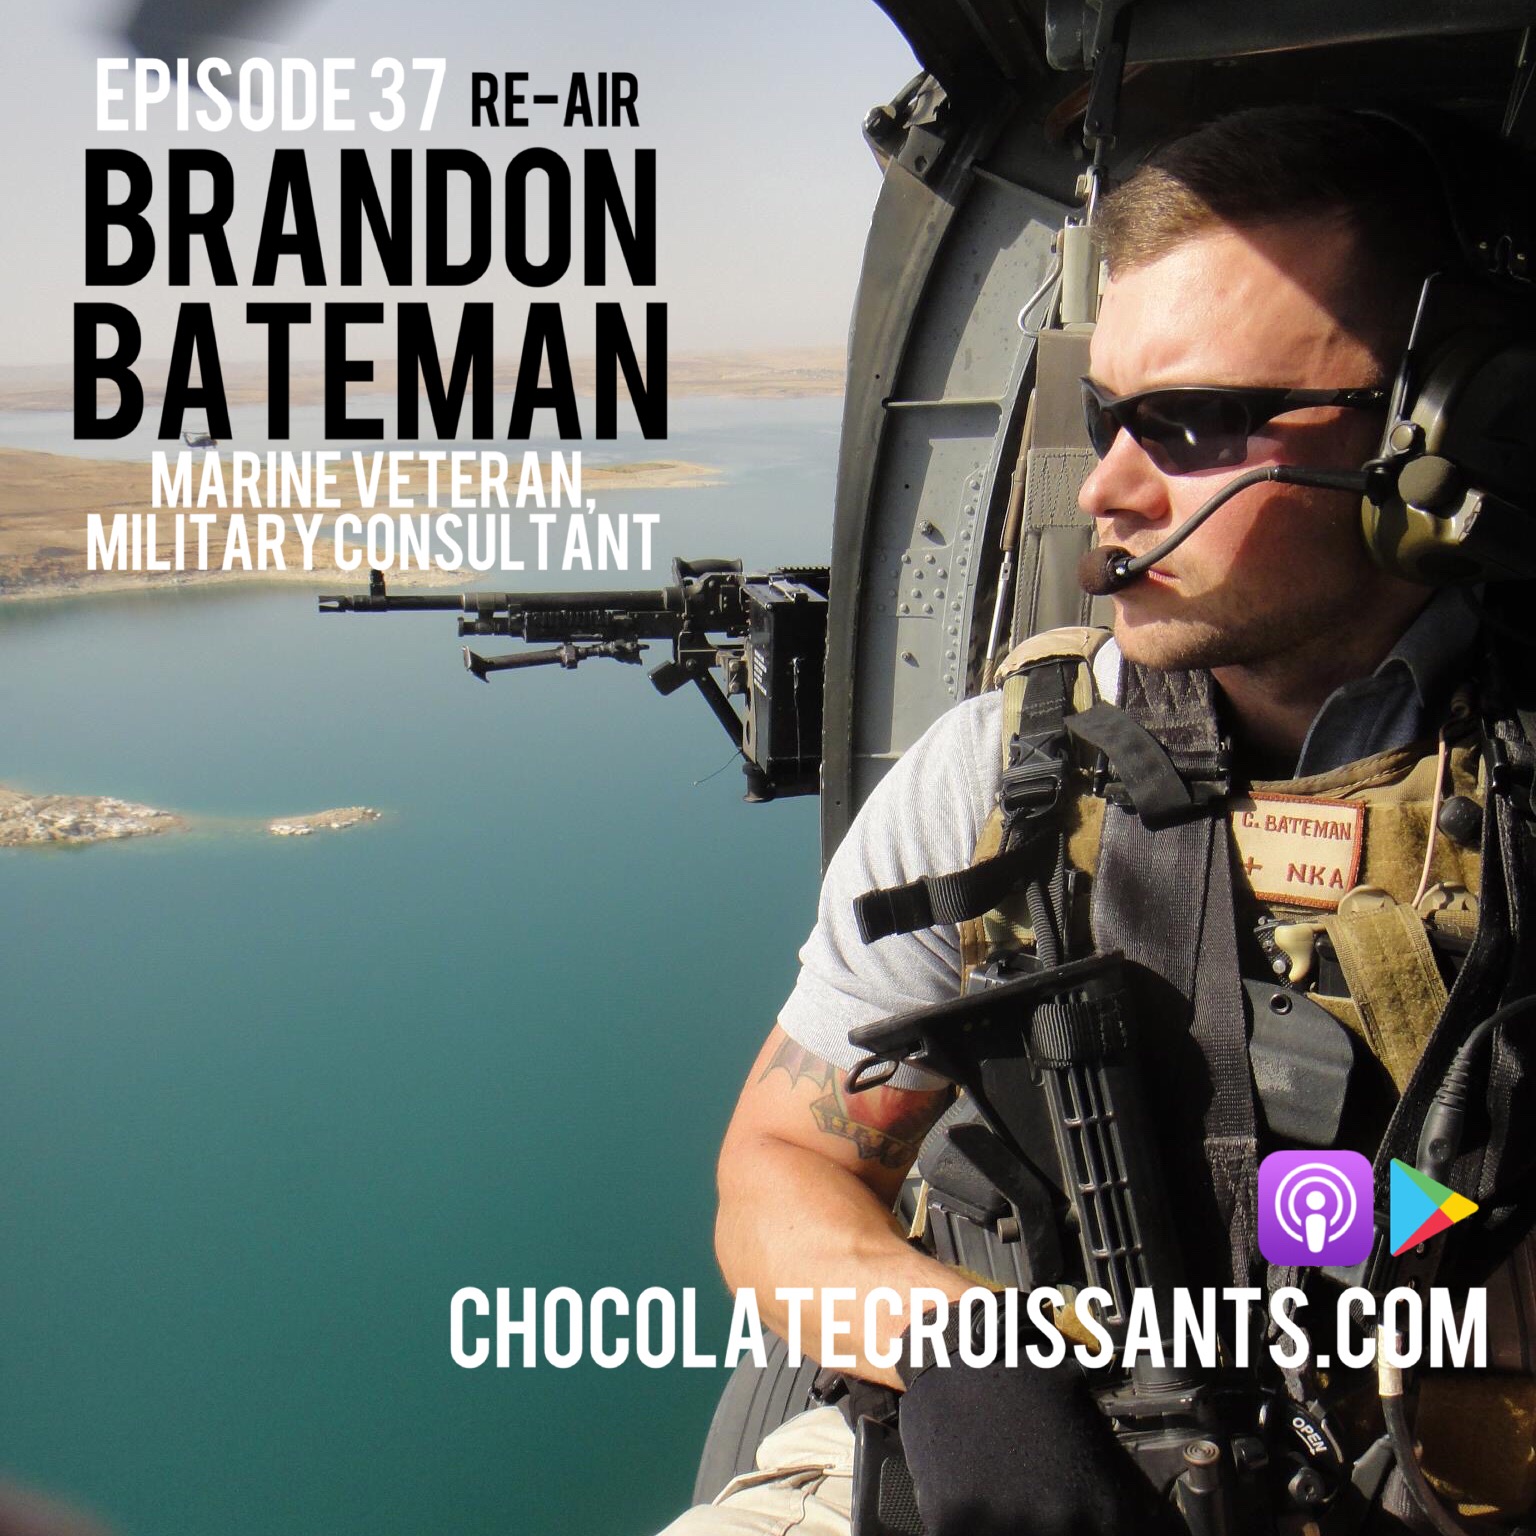 Episode 37: Brandon Bateman (Marine Veteran, Military Consultant) Re-Air